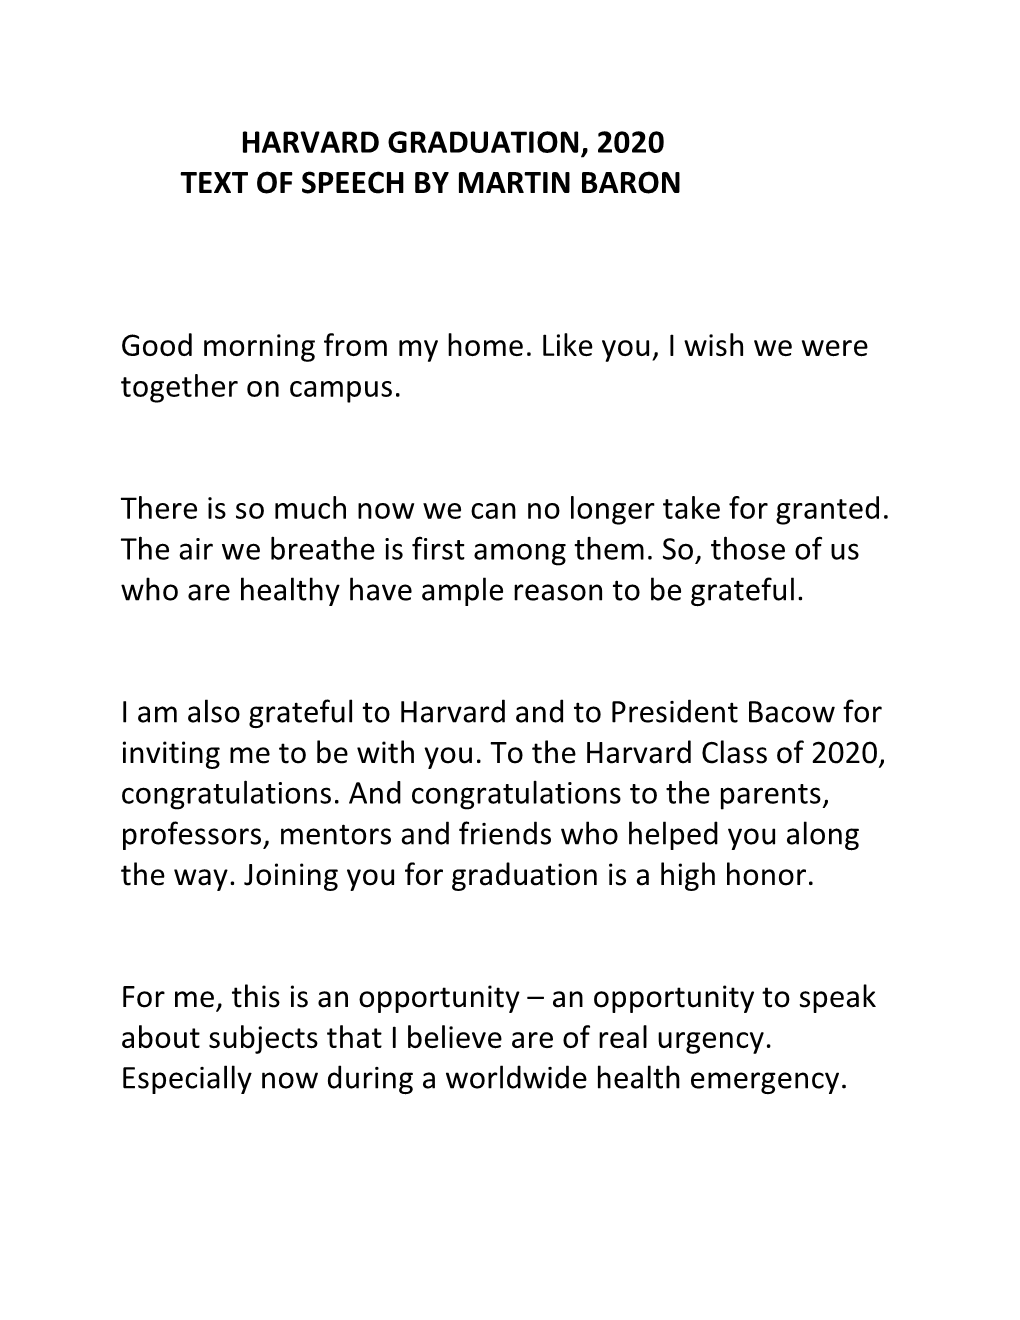 Martin Baron, Graduation Address